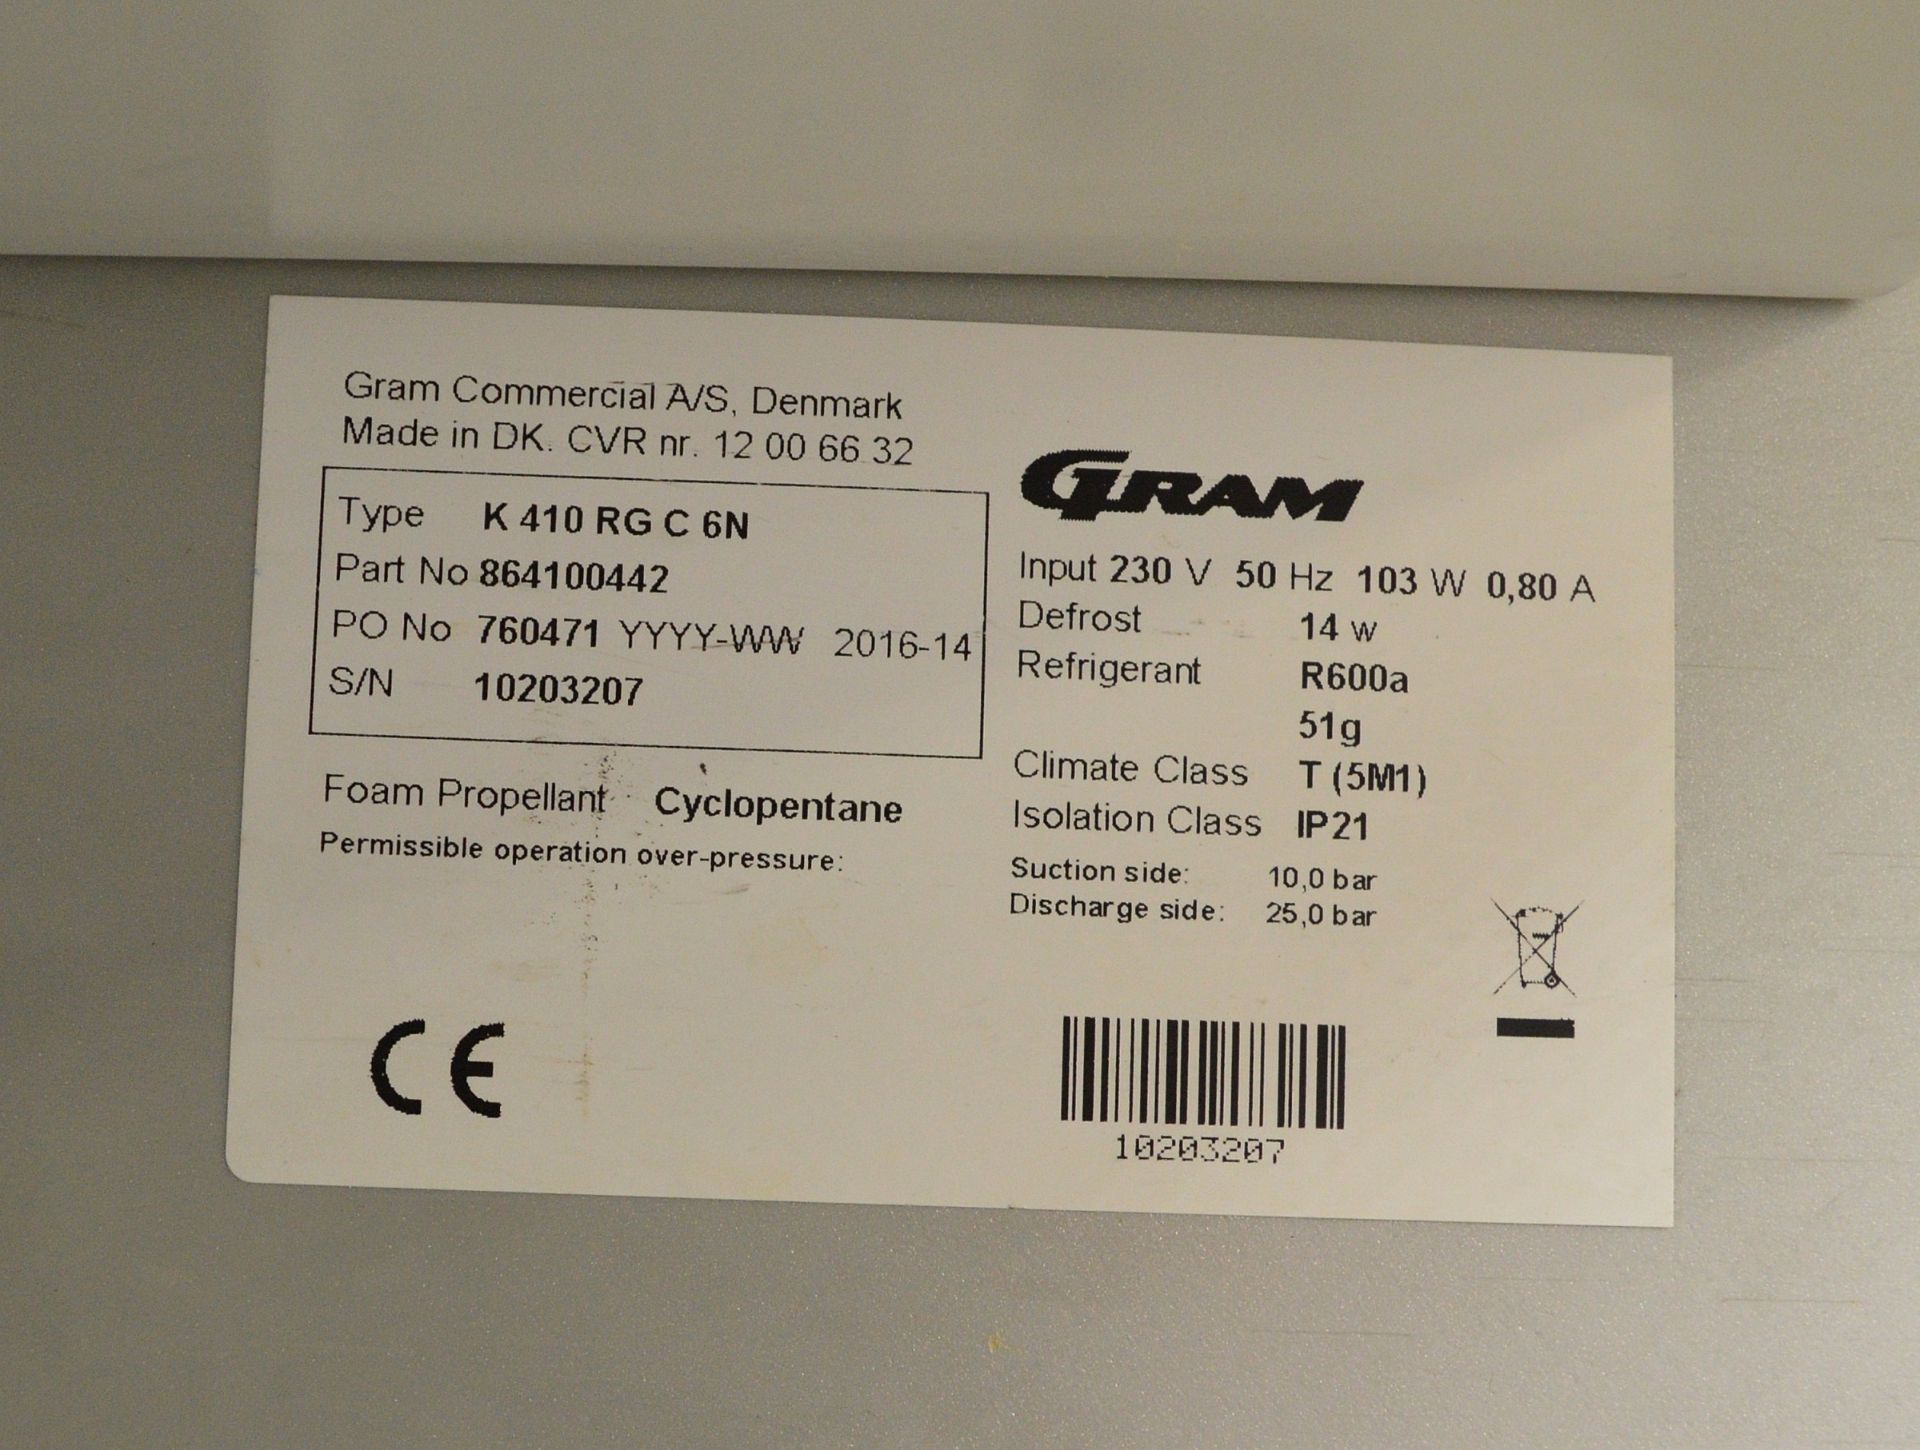 Gram K410 RG C 6N Stainless Steel Upright Refrigerator - Image 6 of 7